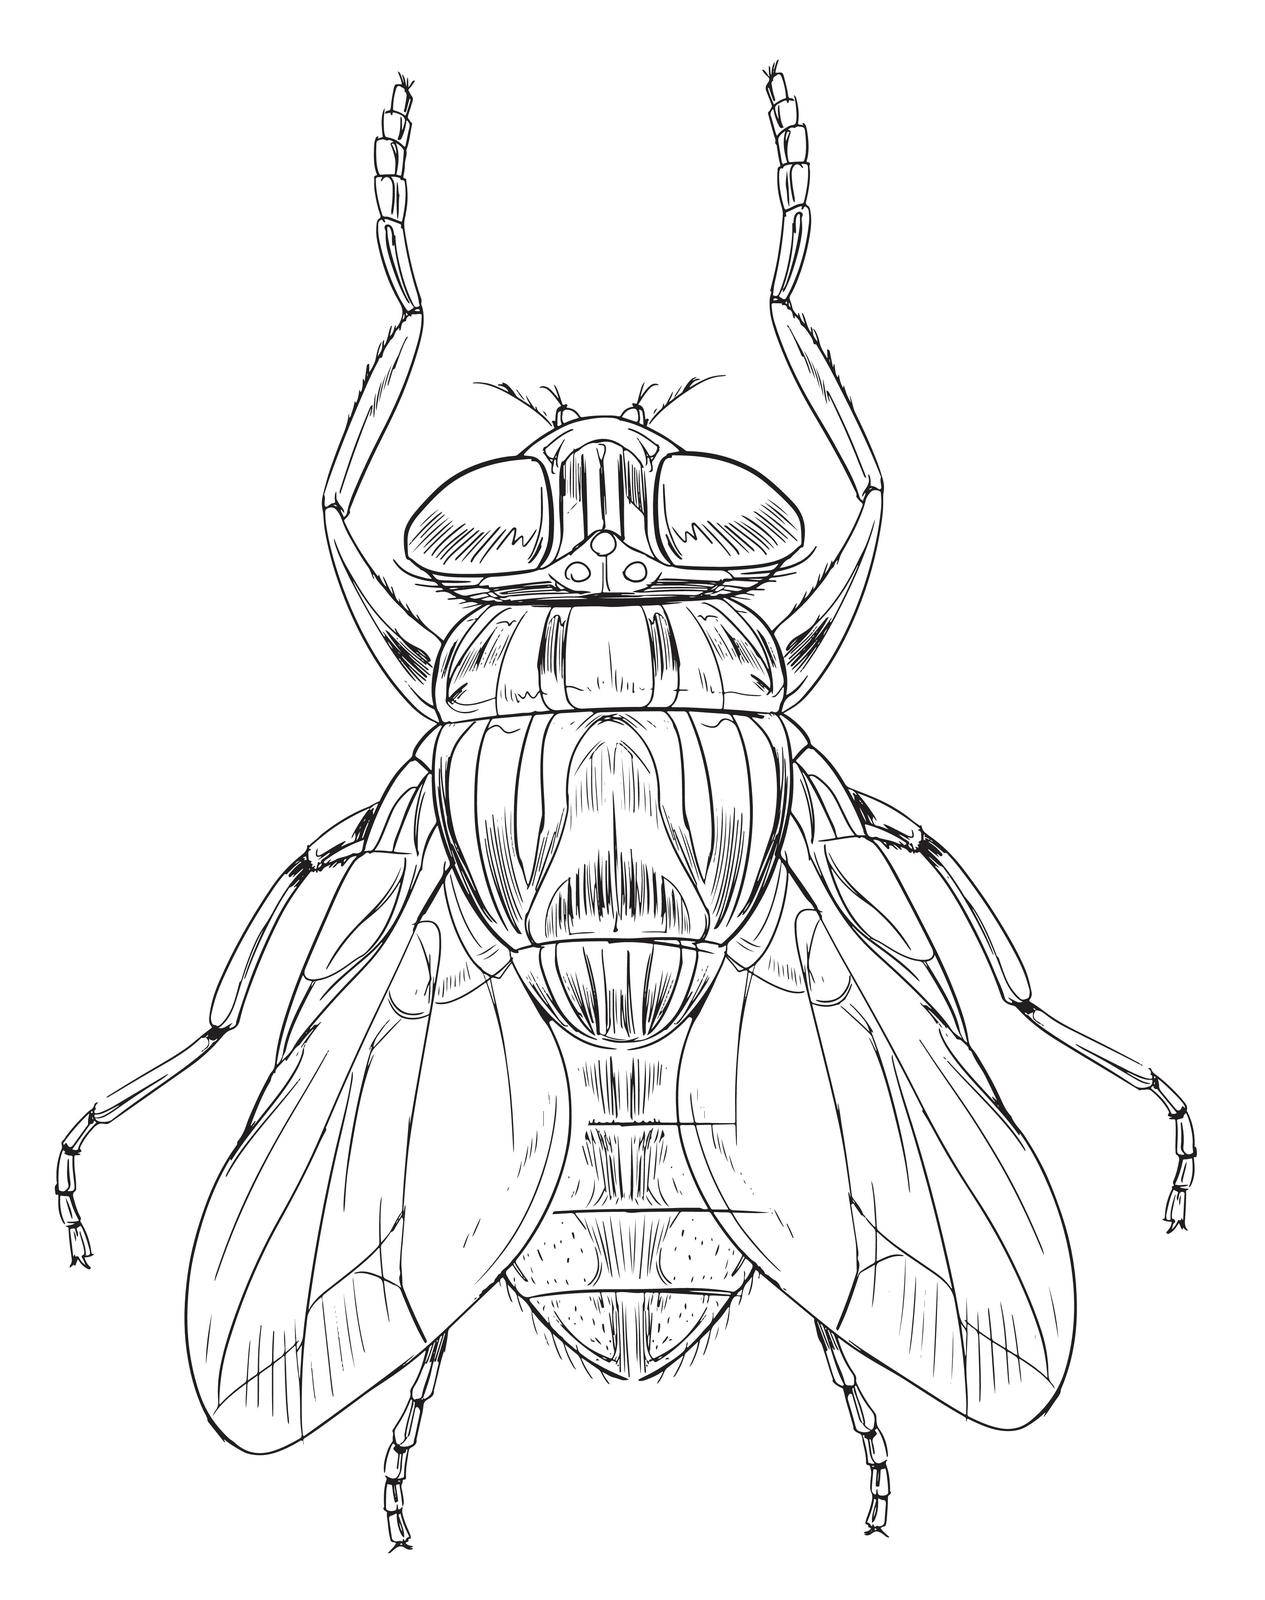 Common housefly - Musca domestica